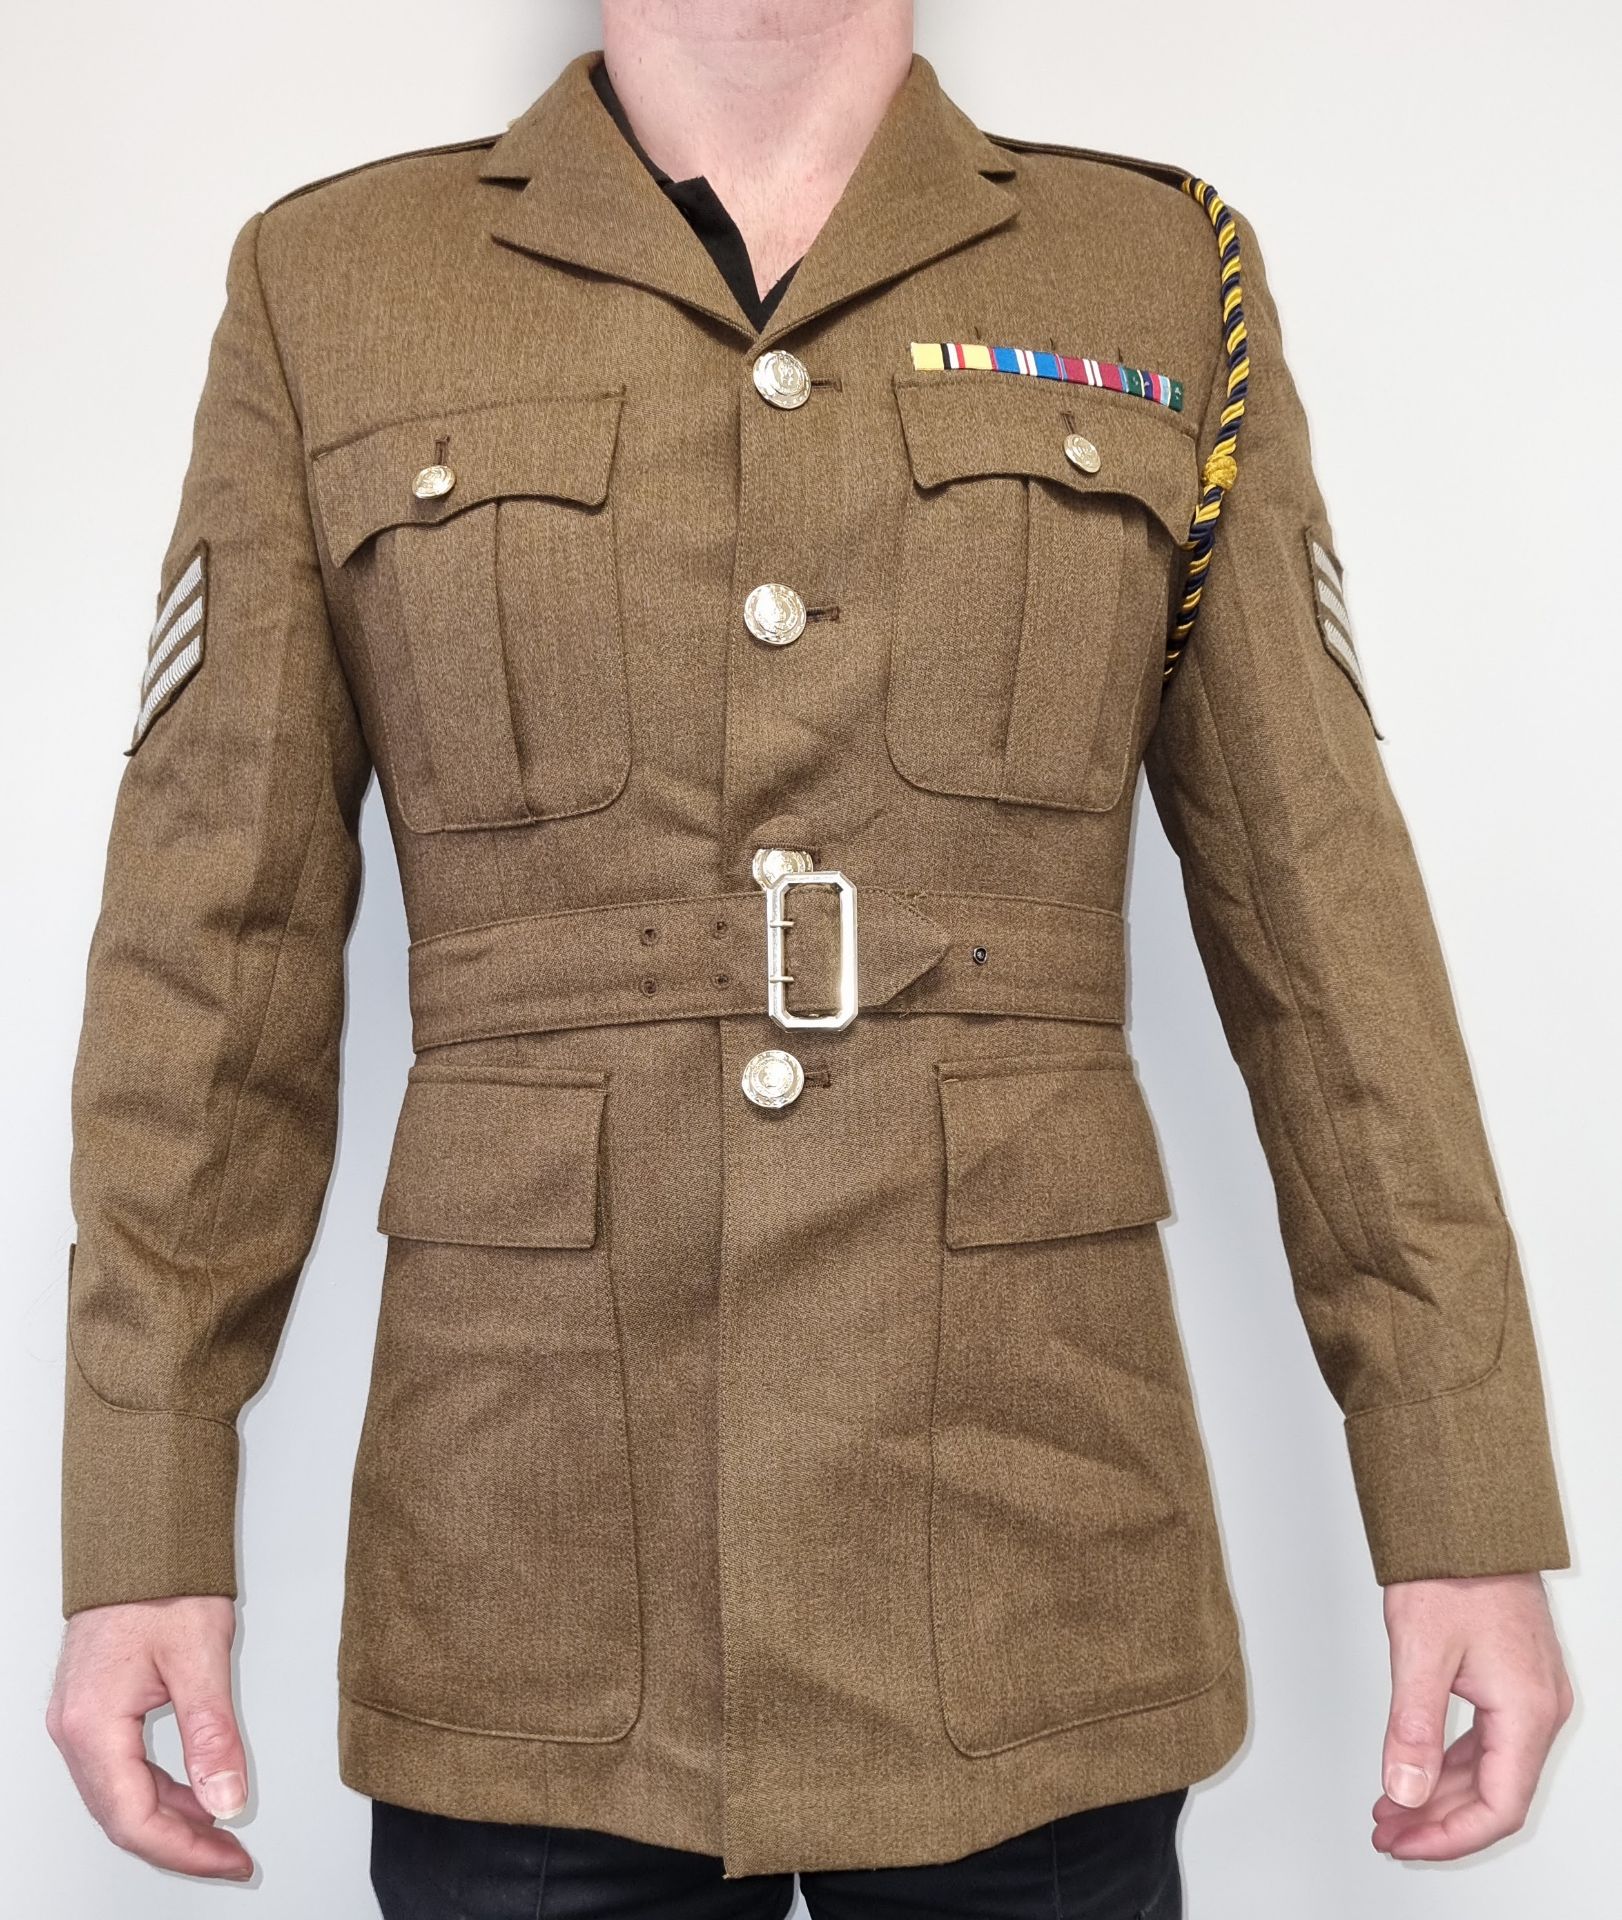 20x British Army No 2 dress jackets - mixed grades and sizes